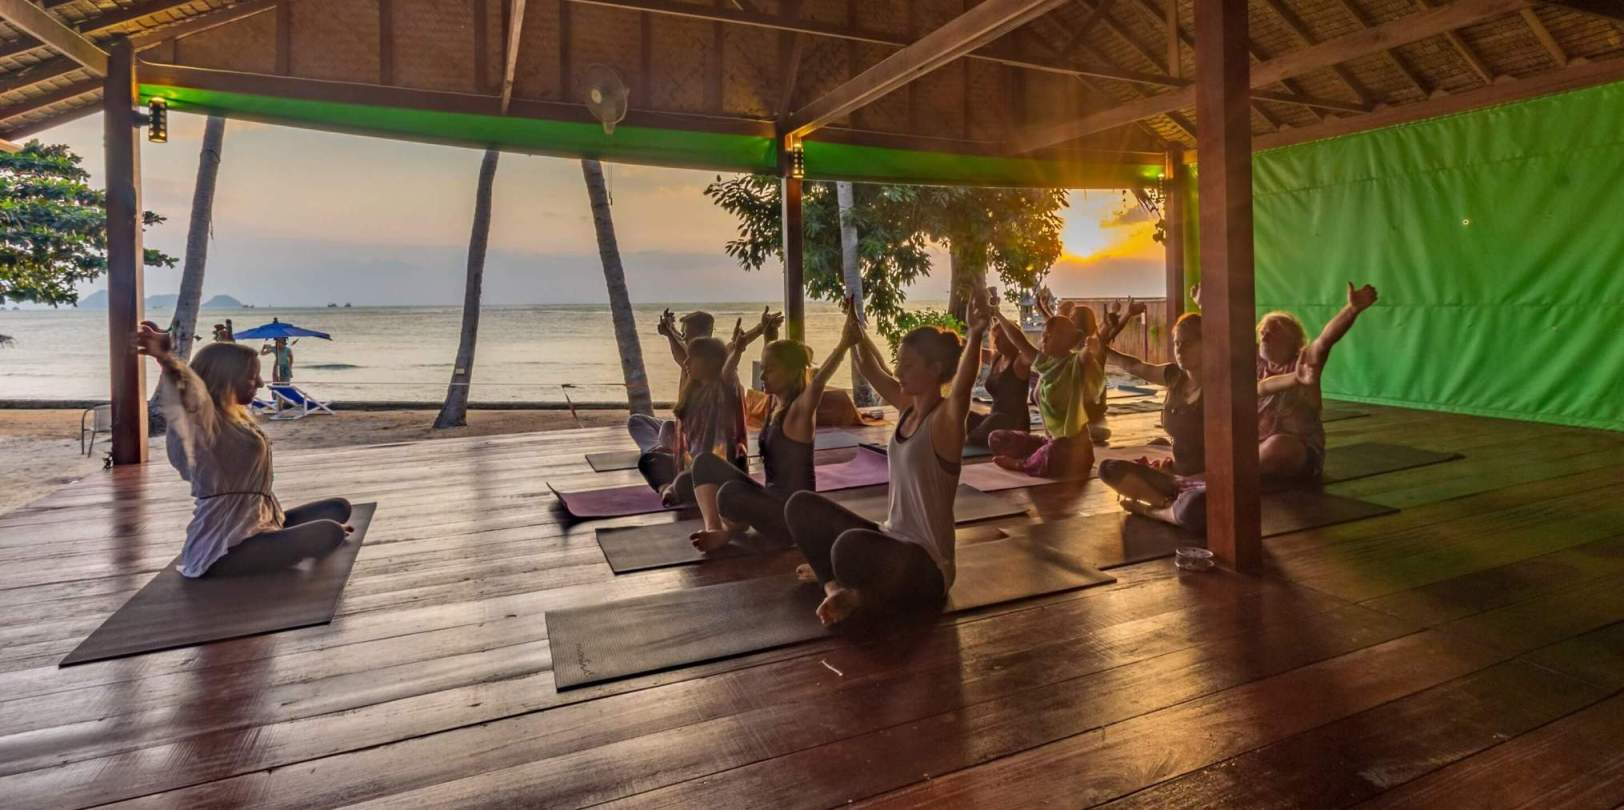 samma karuna yoga & healing school koh phangan, thailand (21)1543036423.jpg